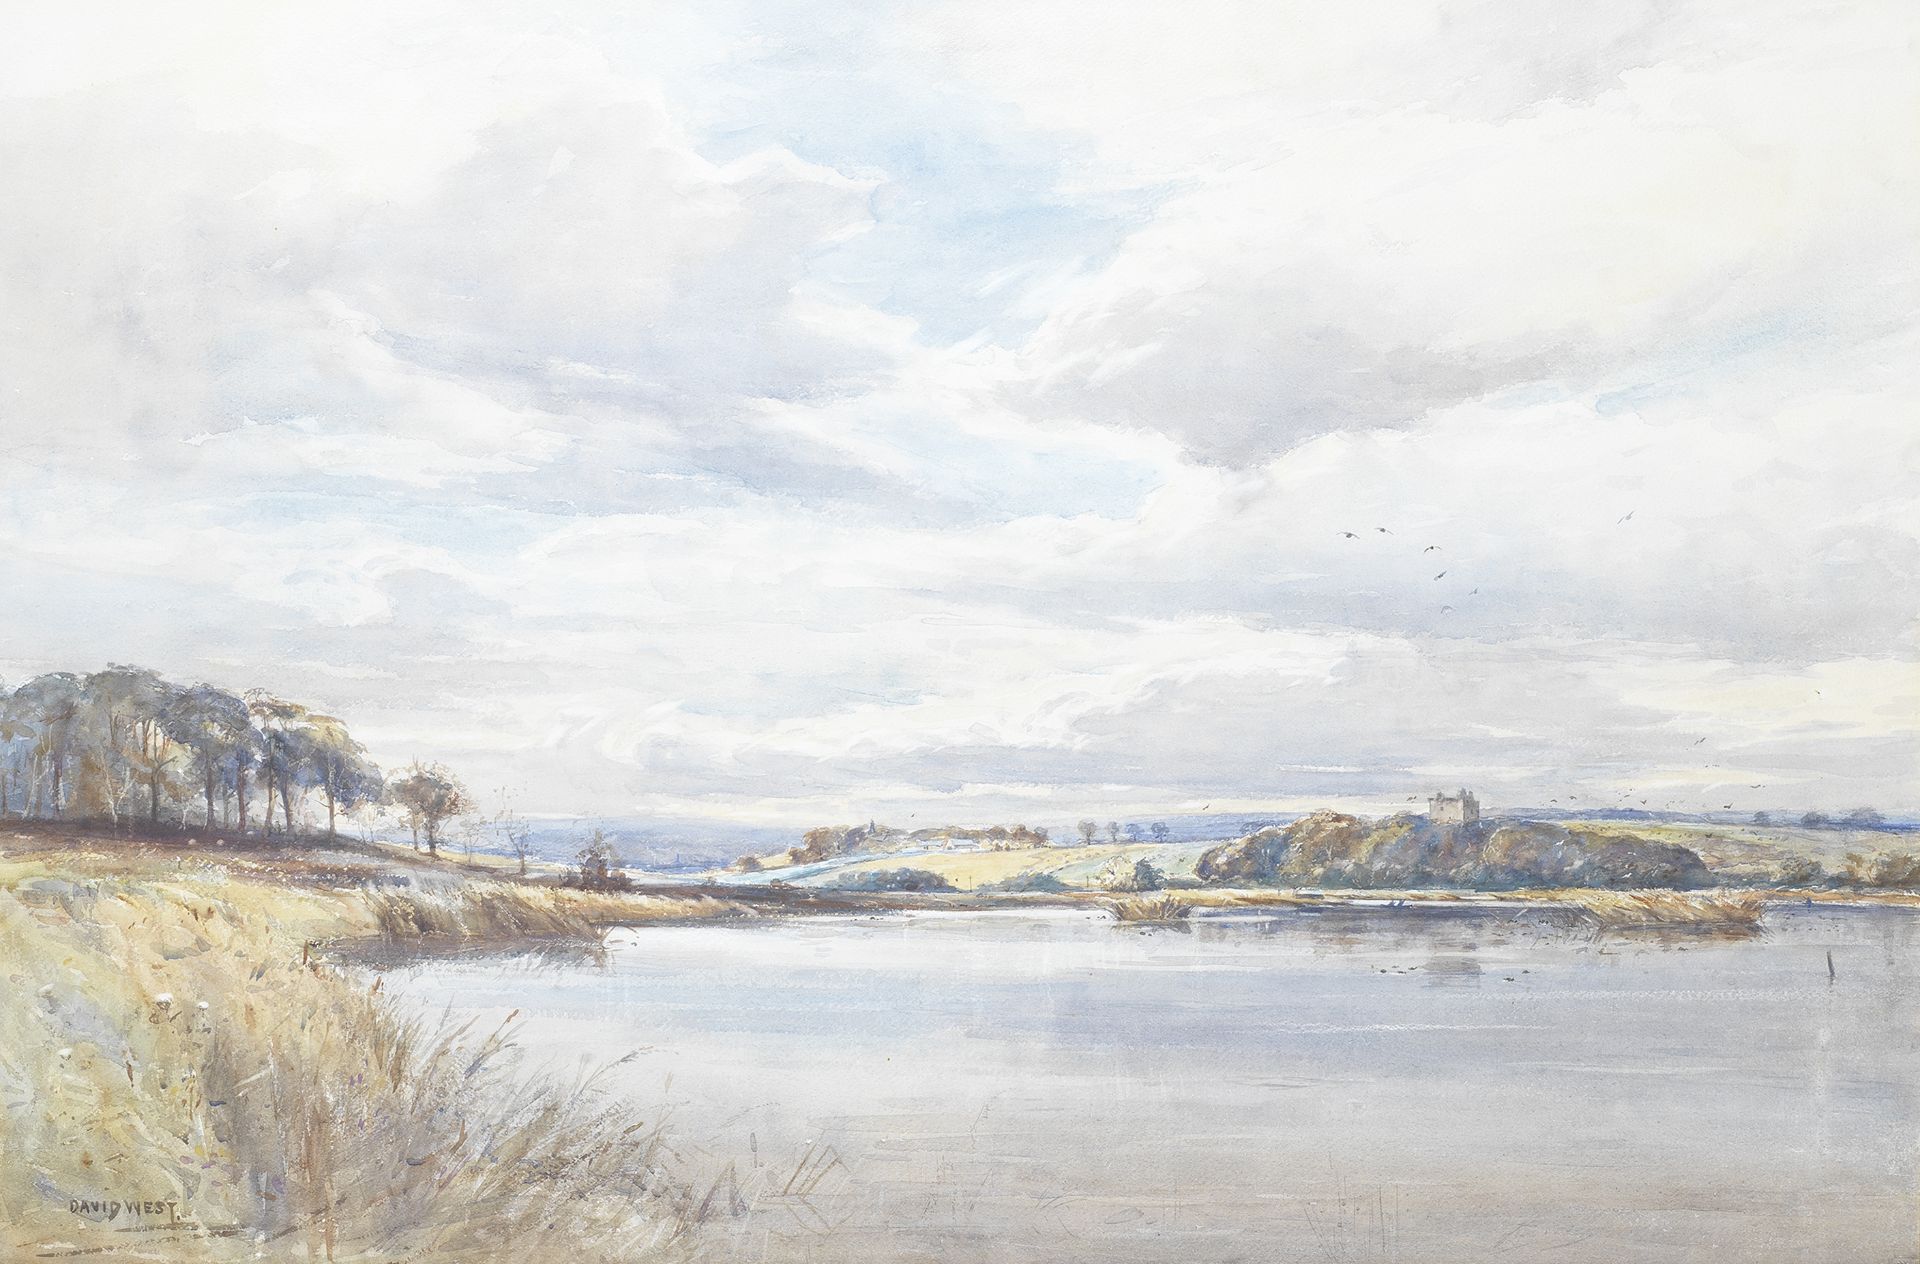 David West RSW (British, 1868-1936) A loch with castle beyond